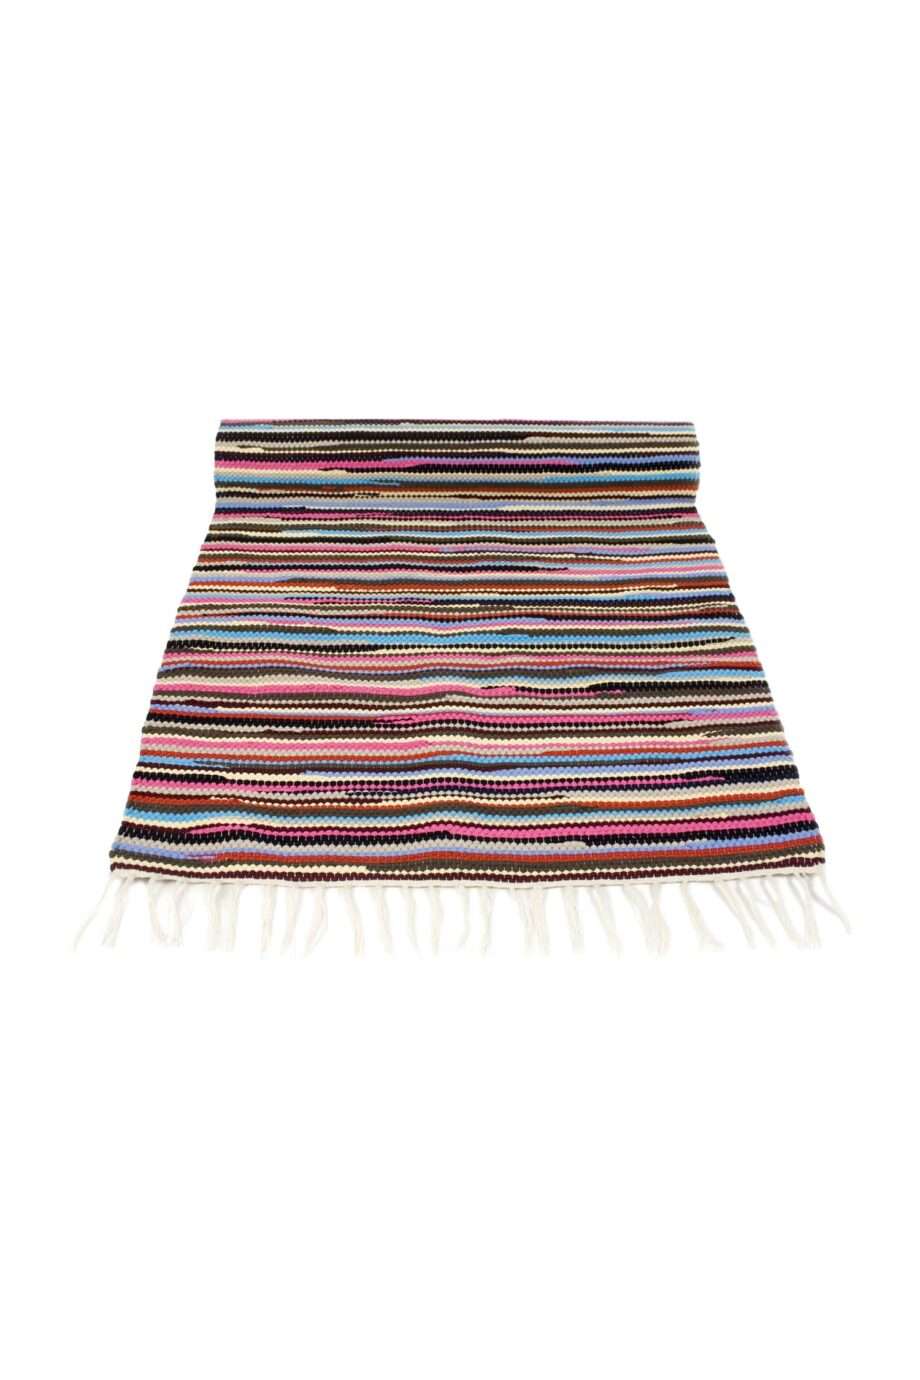 stripy  woven cotton floor runner large